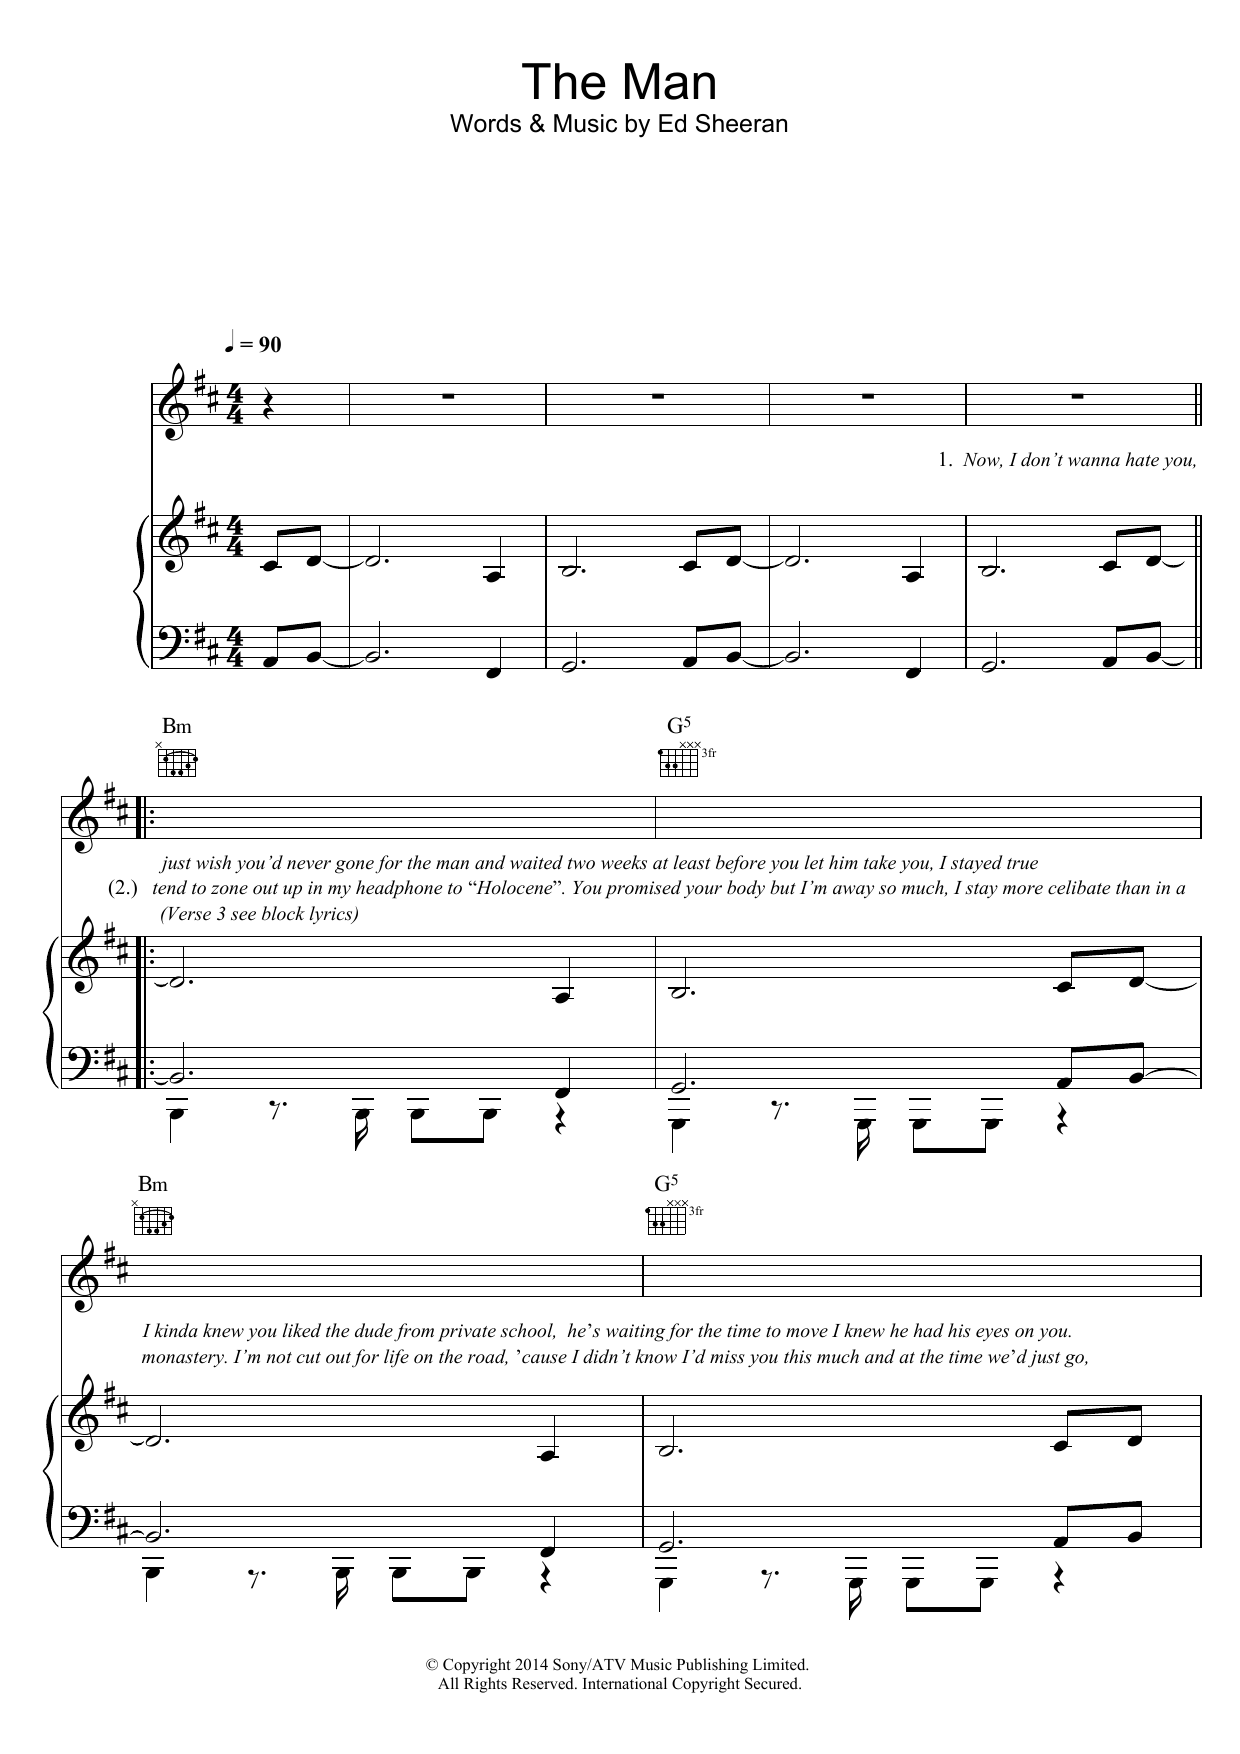 Ed Sheeran The Man Sheet Music Notes & Chords for Guitar Tab - Download or Print PDF